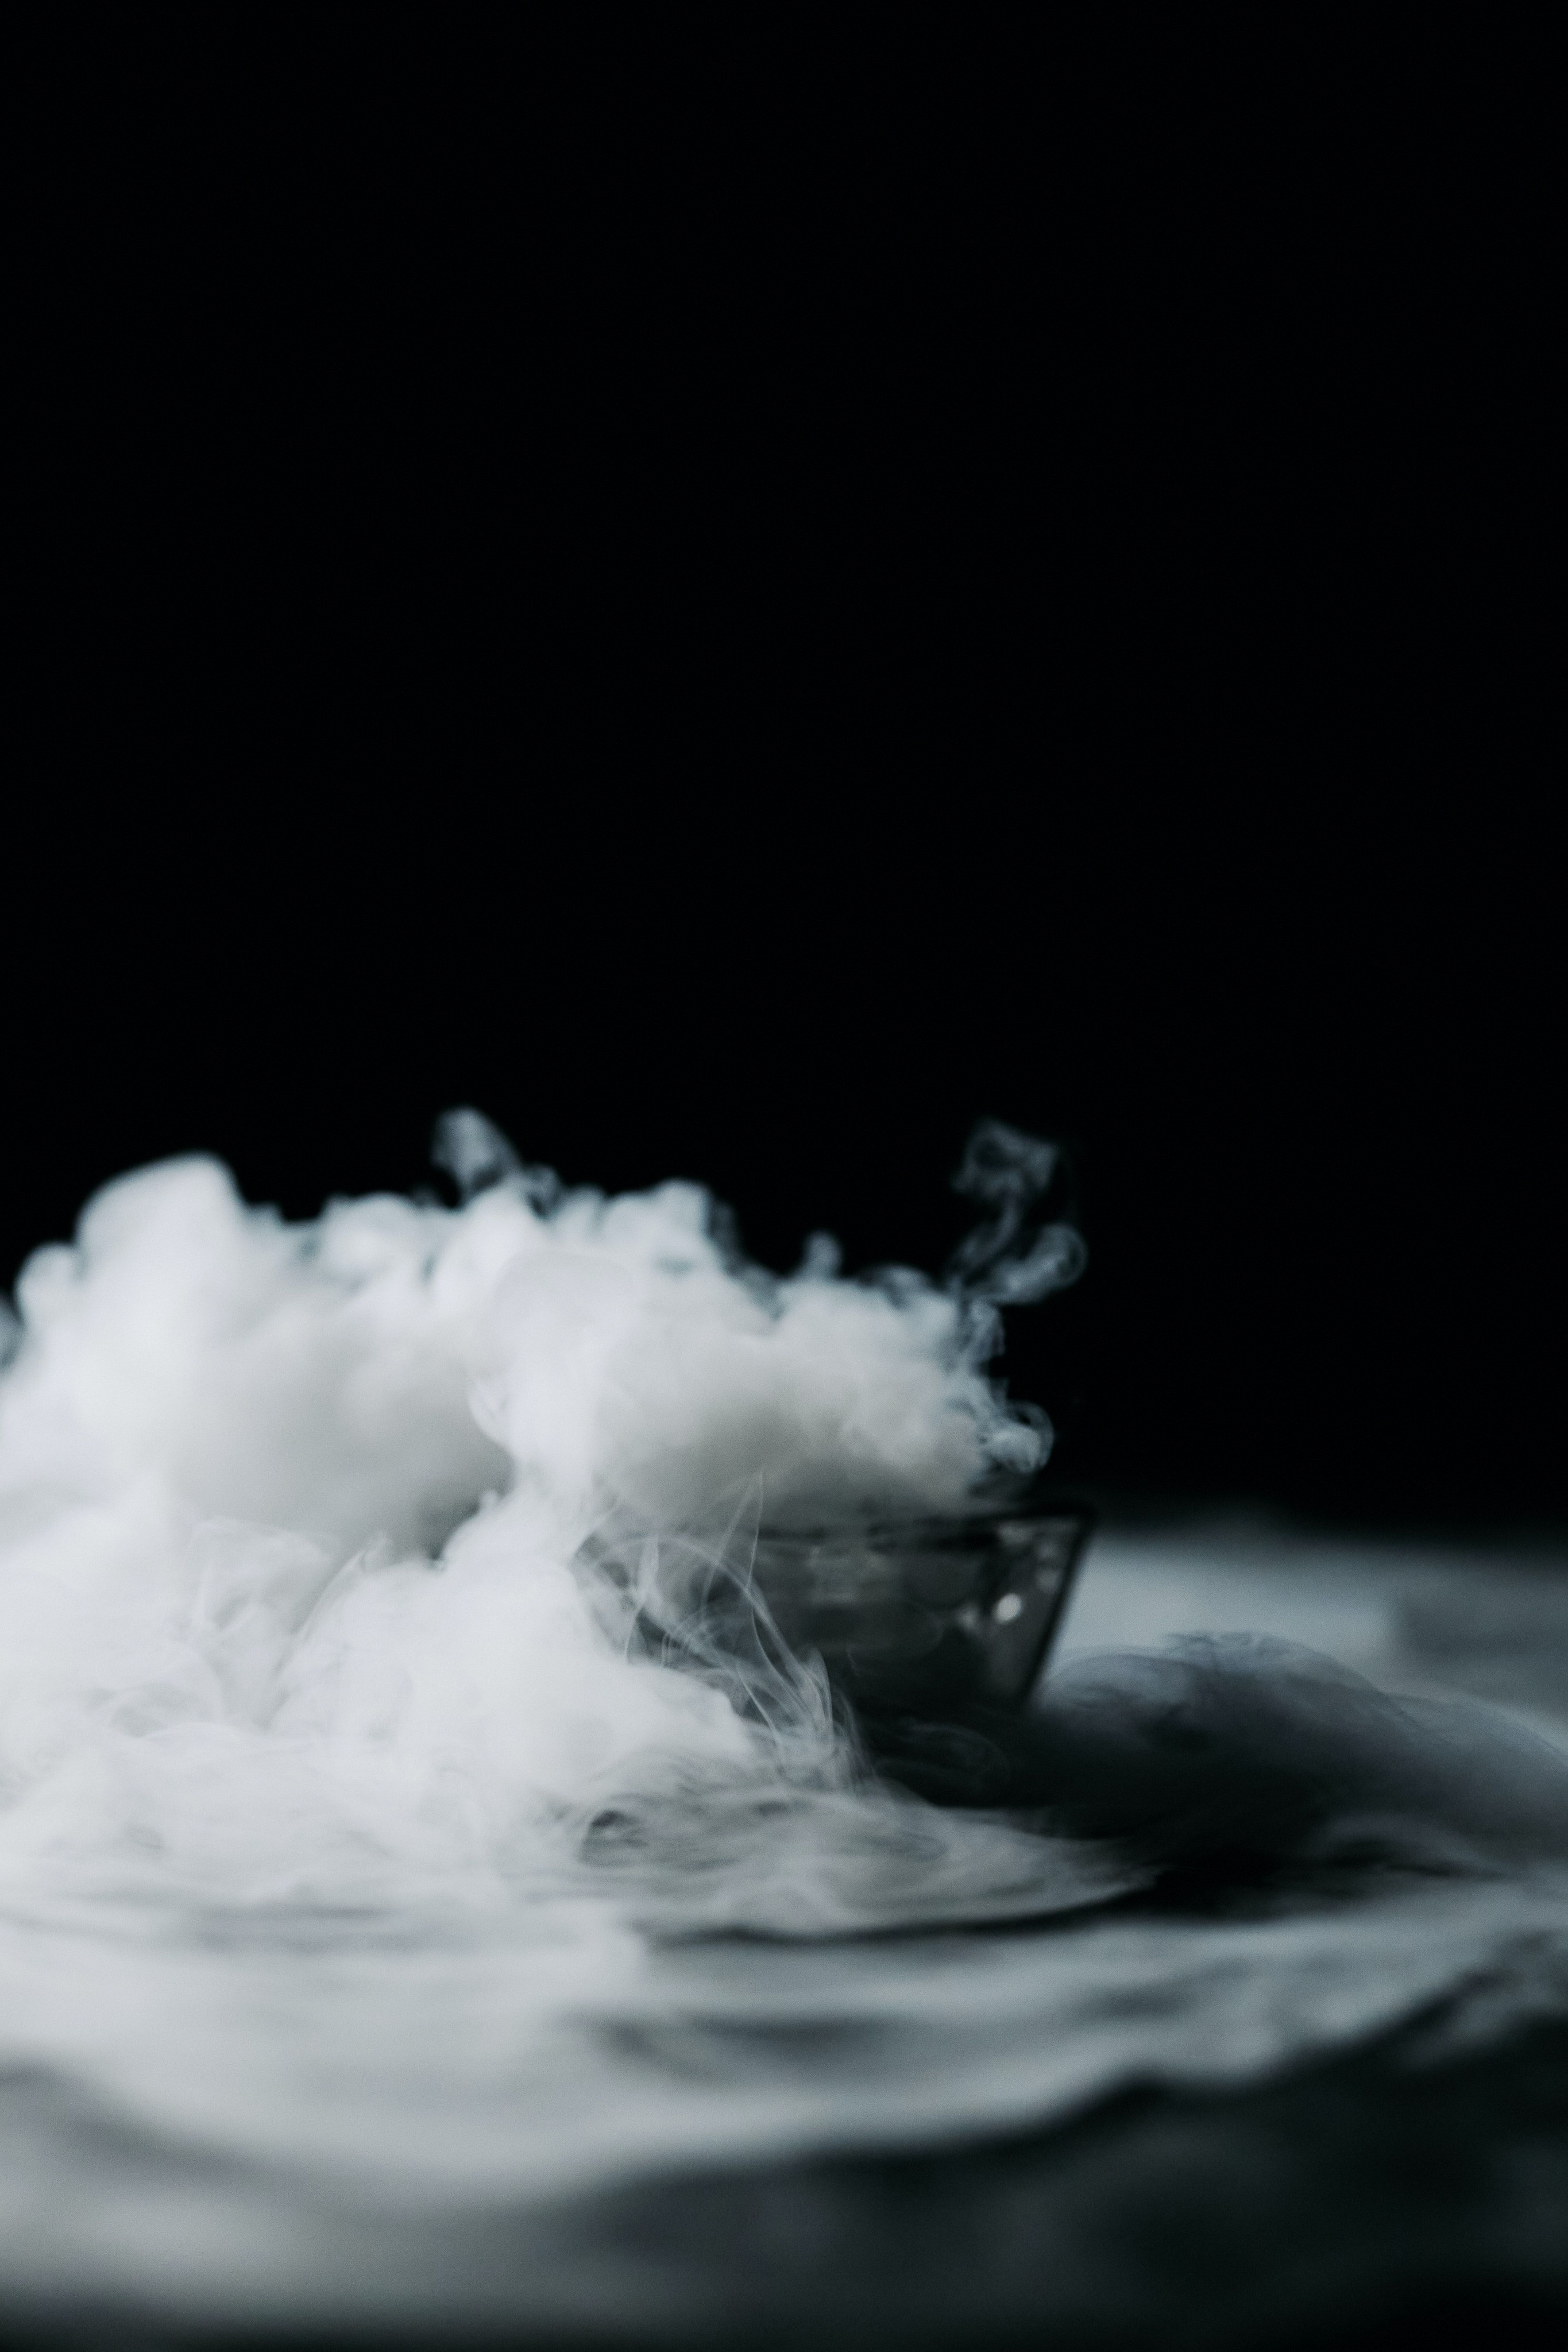 A bowl of smoke on a black background - Smoke